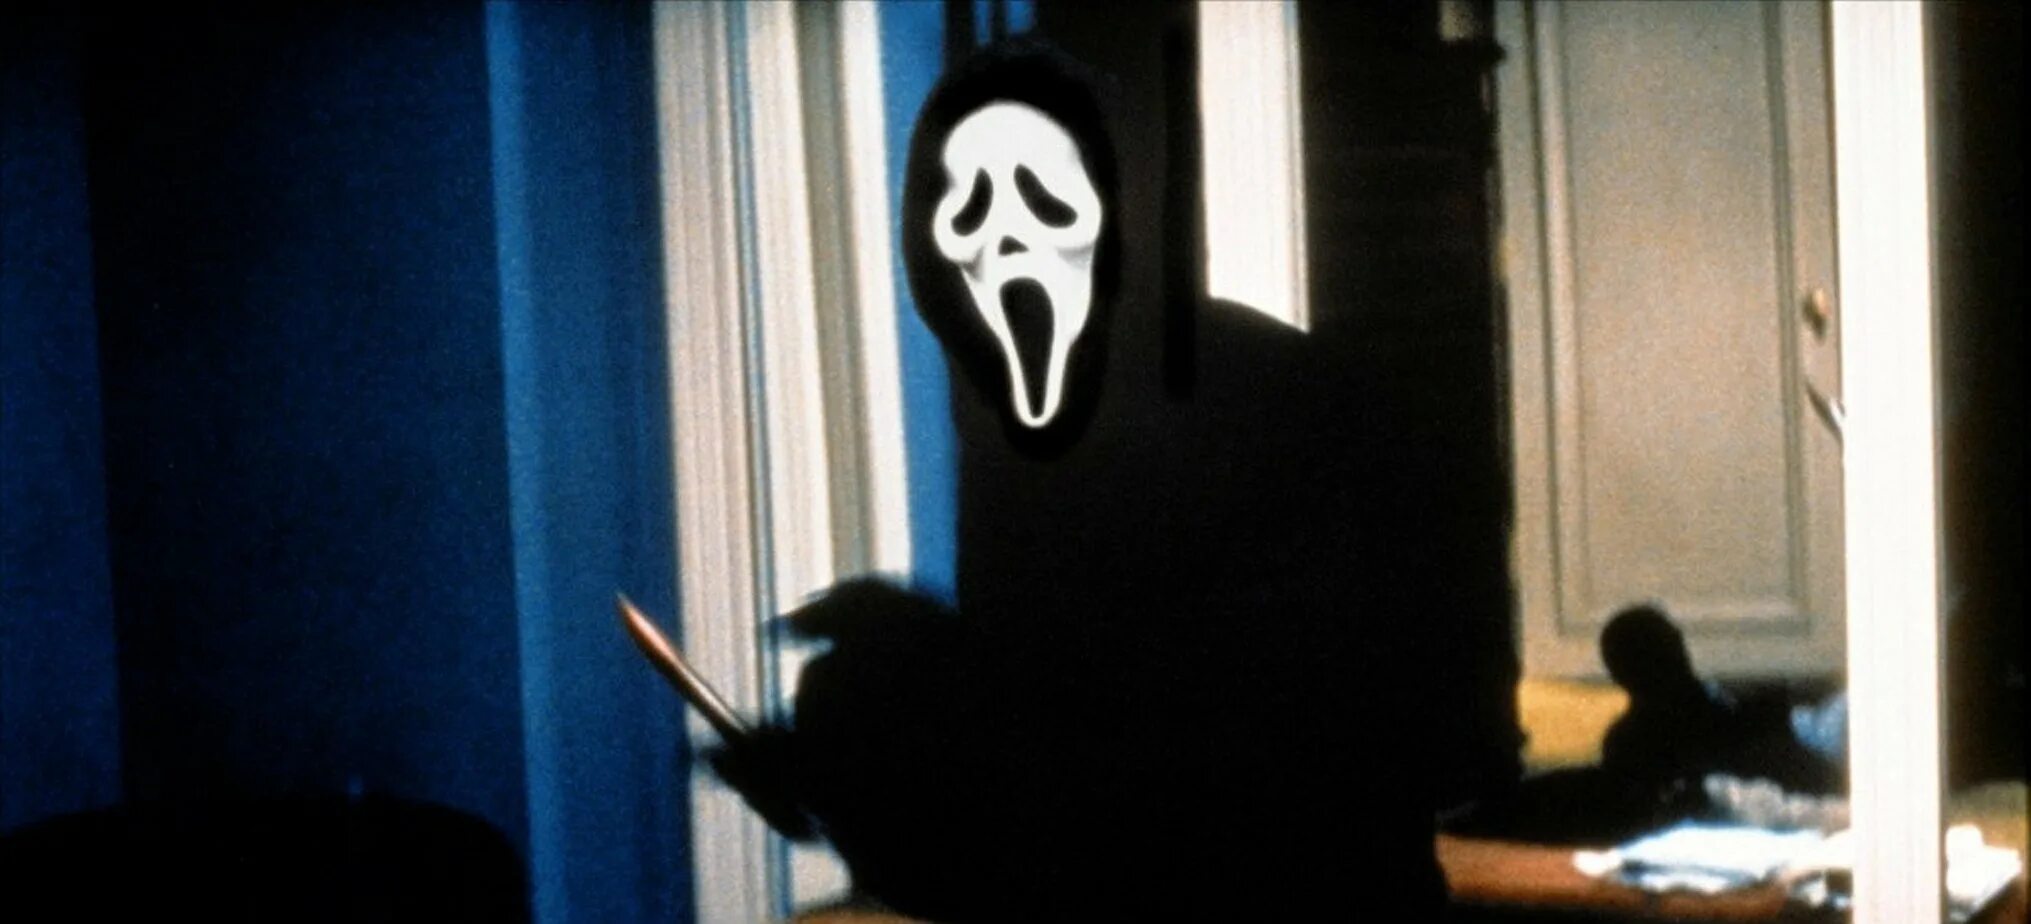 «Крик» (Scream 1996, Режиссер Уэс Крэйвен). Уэс Крэйвен крик 3. Глупый крик